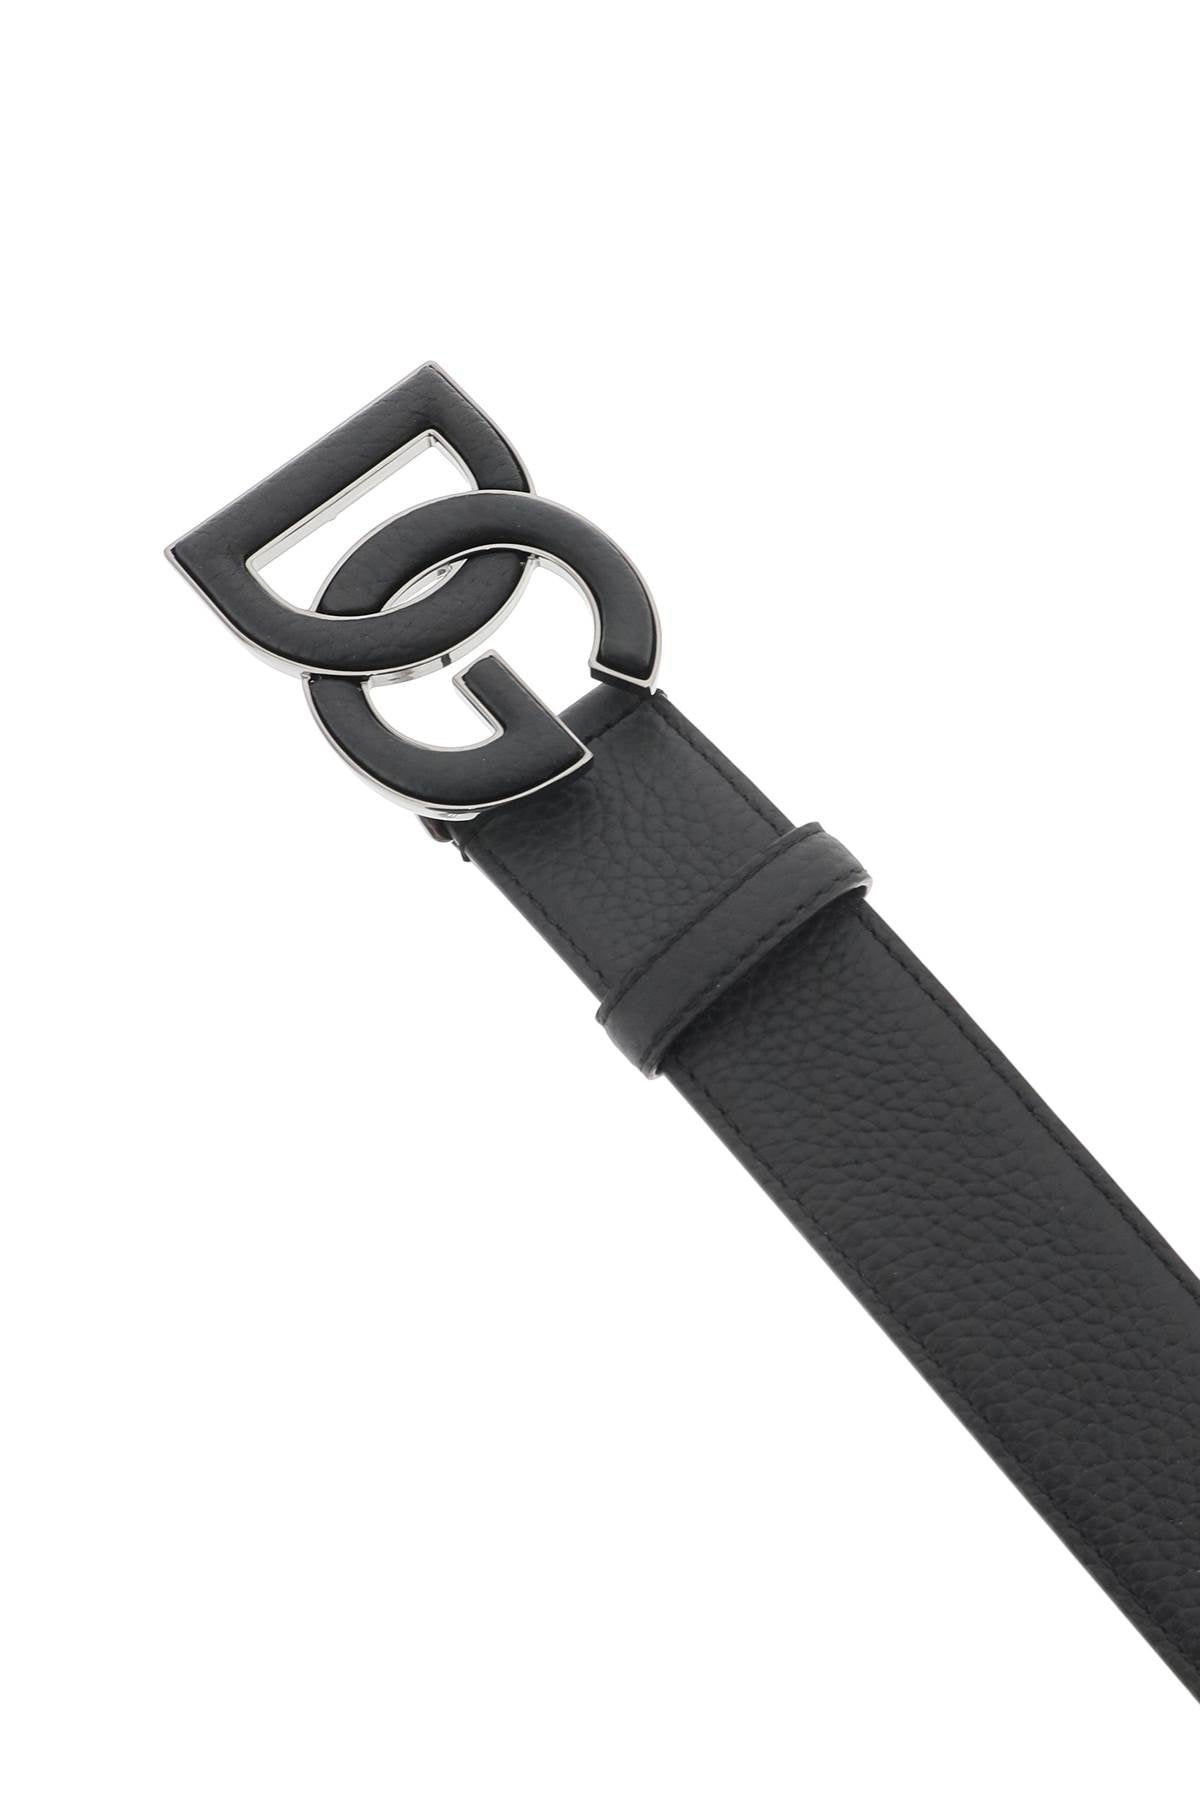 Dolce & gabbana leather belt with dg logo buckle-2